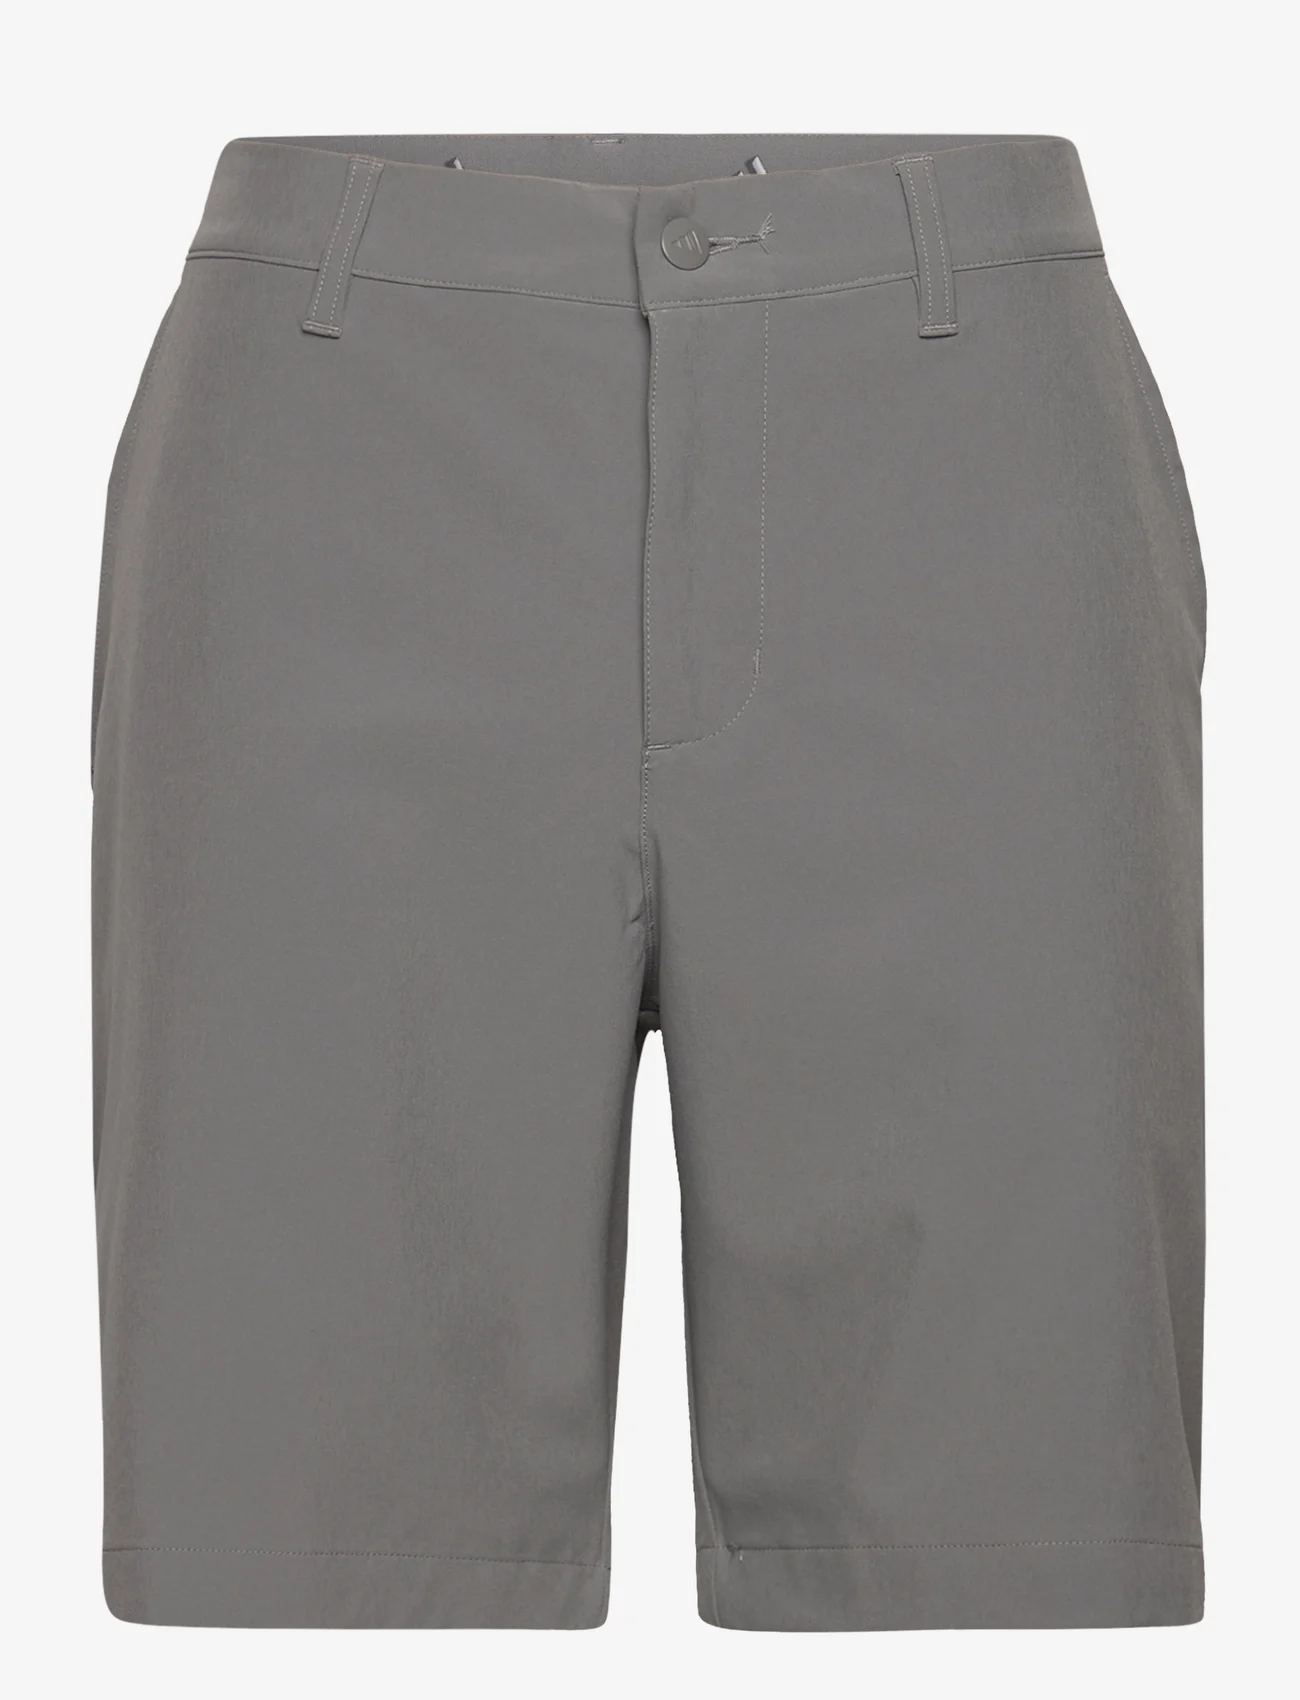 adidas Golf - ULT 8.5IN SHORT - golf-shorts - grethr - 0